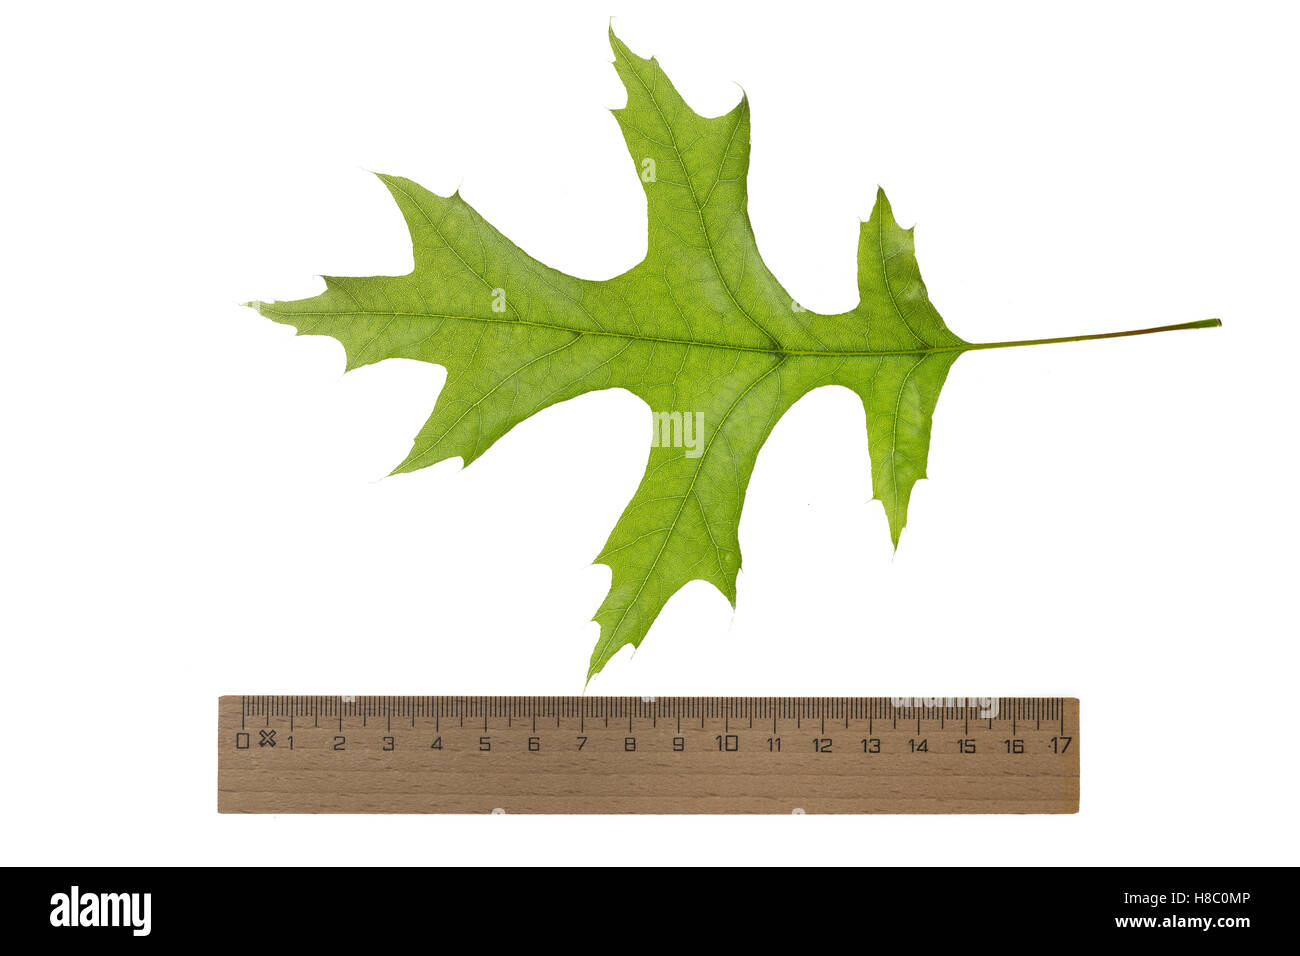 Scharlach-Eiche, Scharlacheiche, Quercus coccinea, scarlet oak, Le chêne écarlate. Blatt, Blätter, leaf, leaves Stock Photo